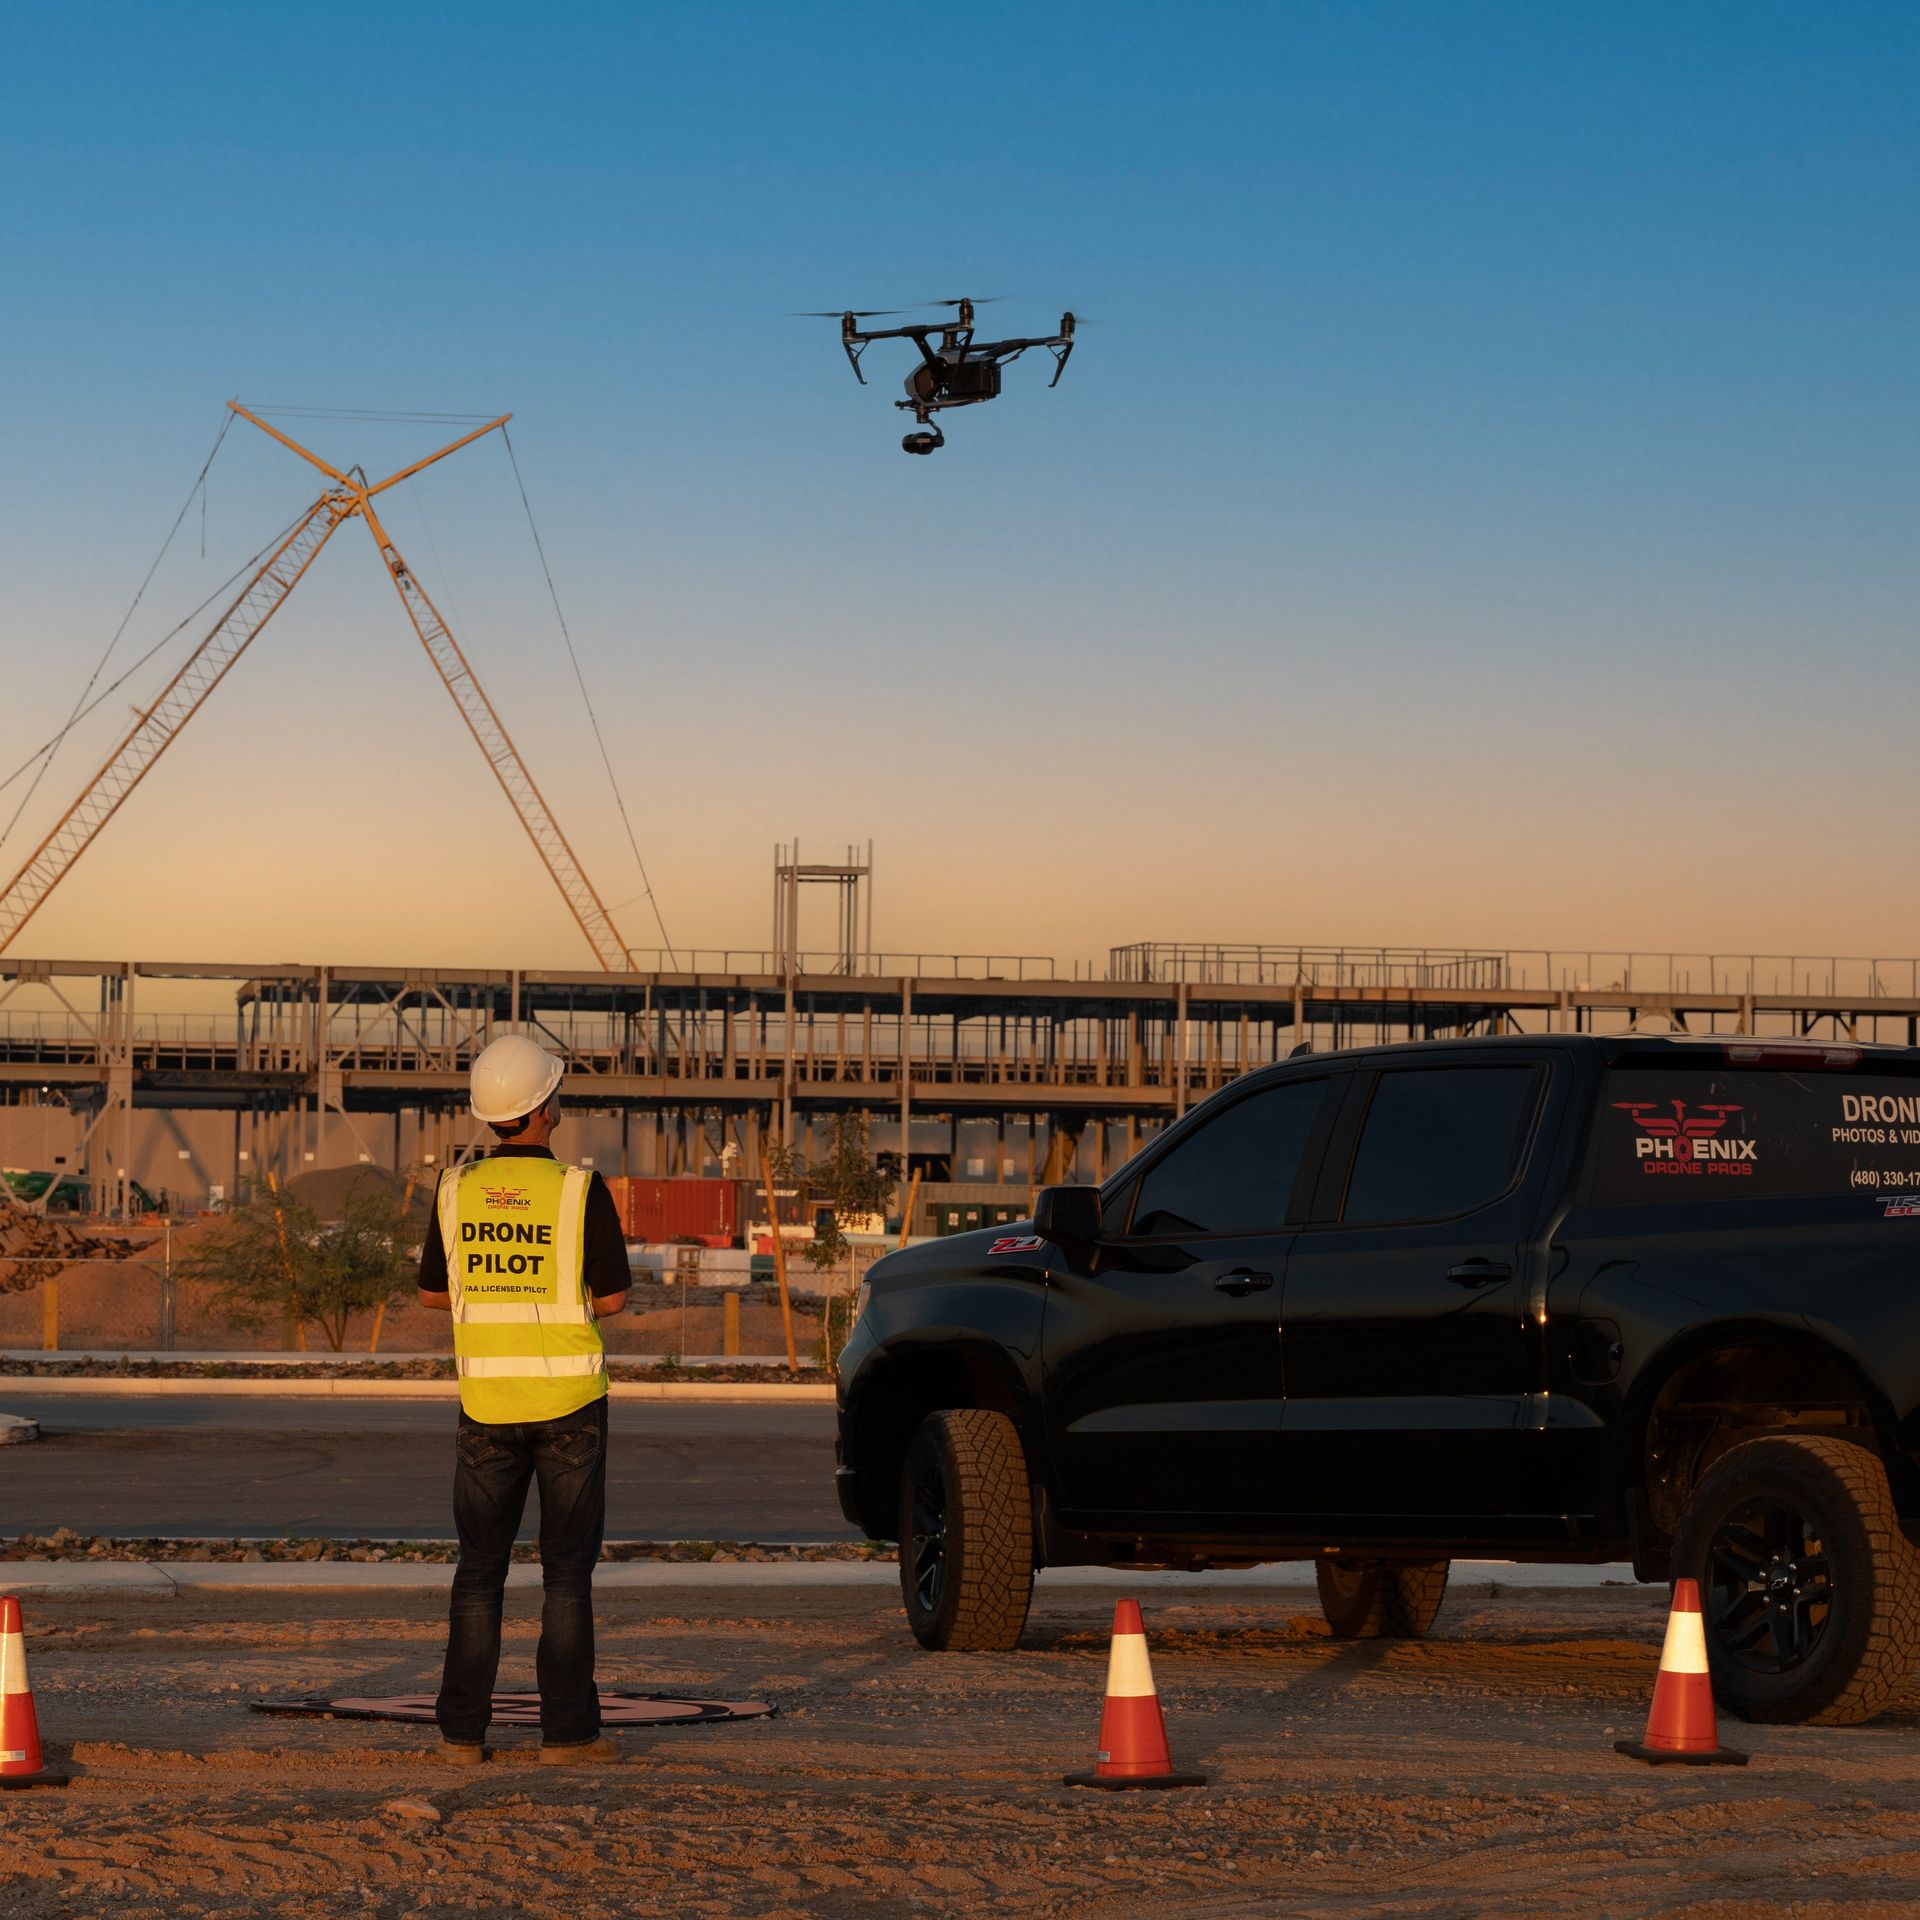 Robert Biggs, Licensed Drone Pilot for Phoenix Drone Pros